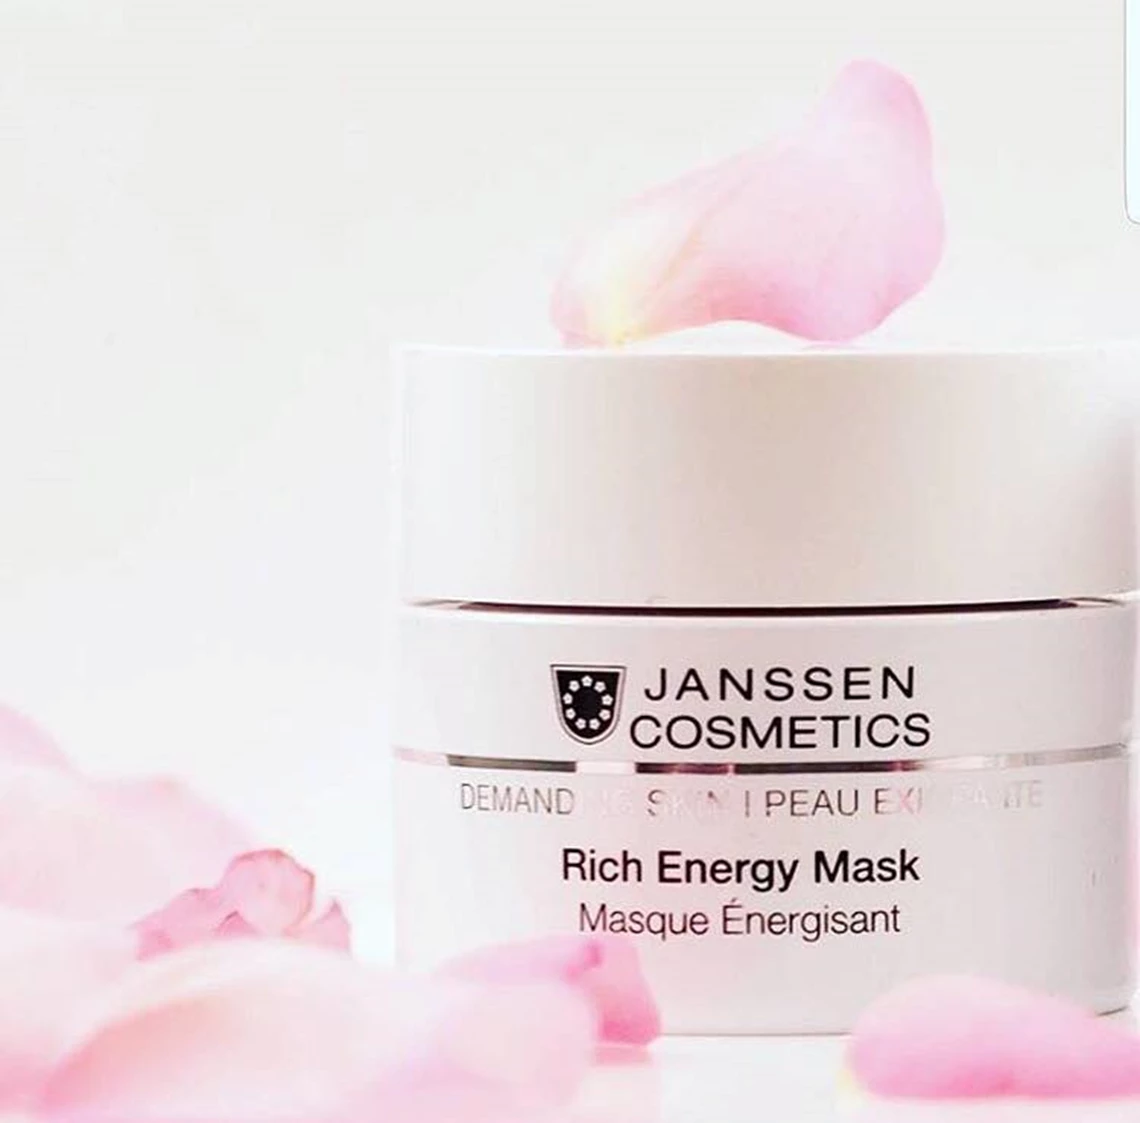 Rich Energy Mask by Janssen Cosmetics